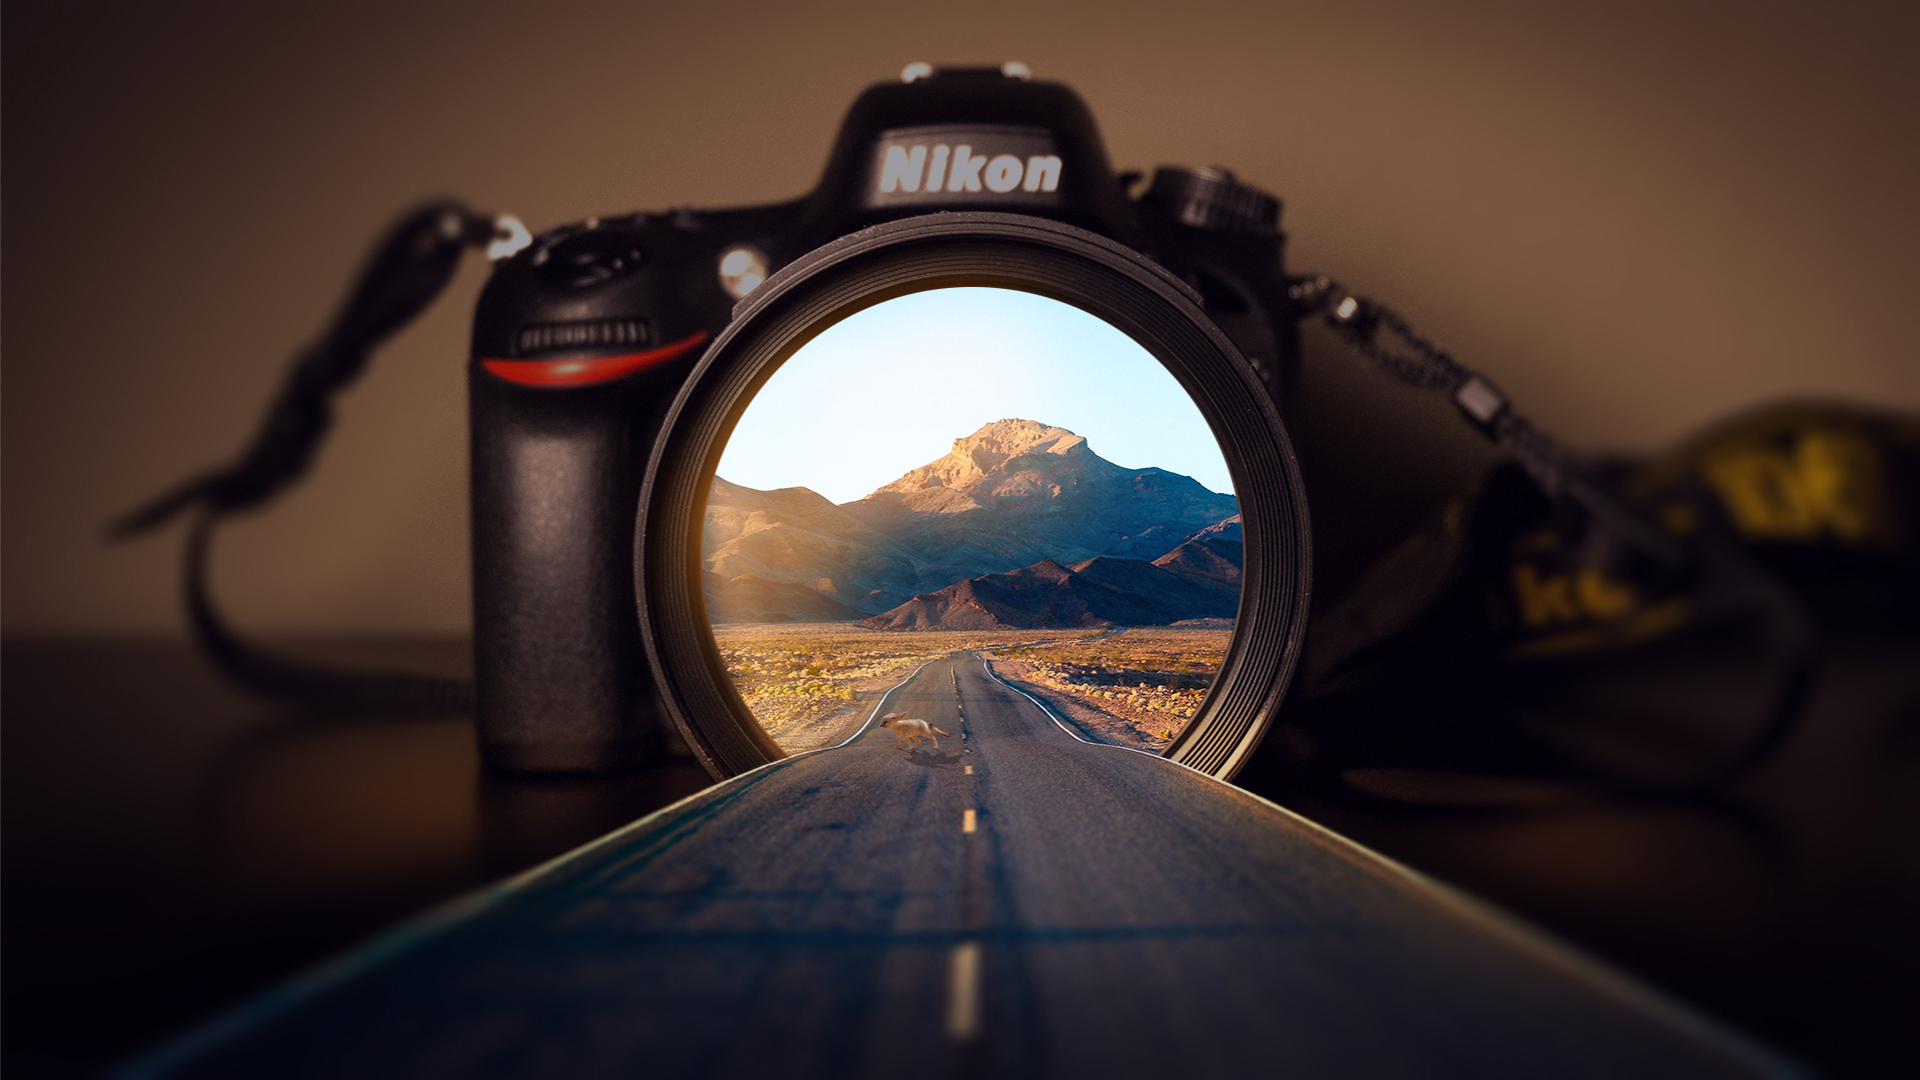 Nikon Camera Desert Abstract Modern Road Digital Art Lens 1920x1080